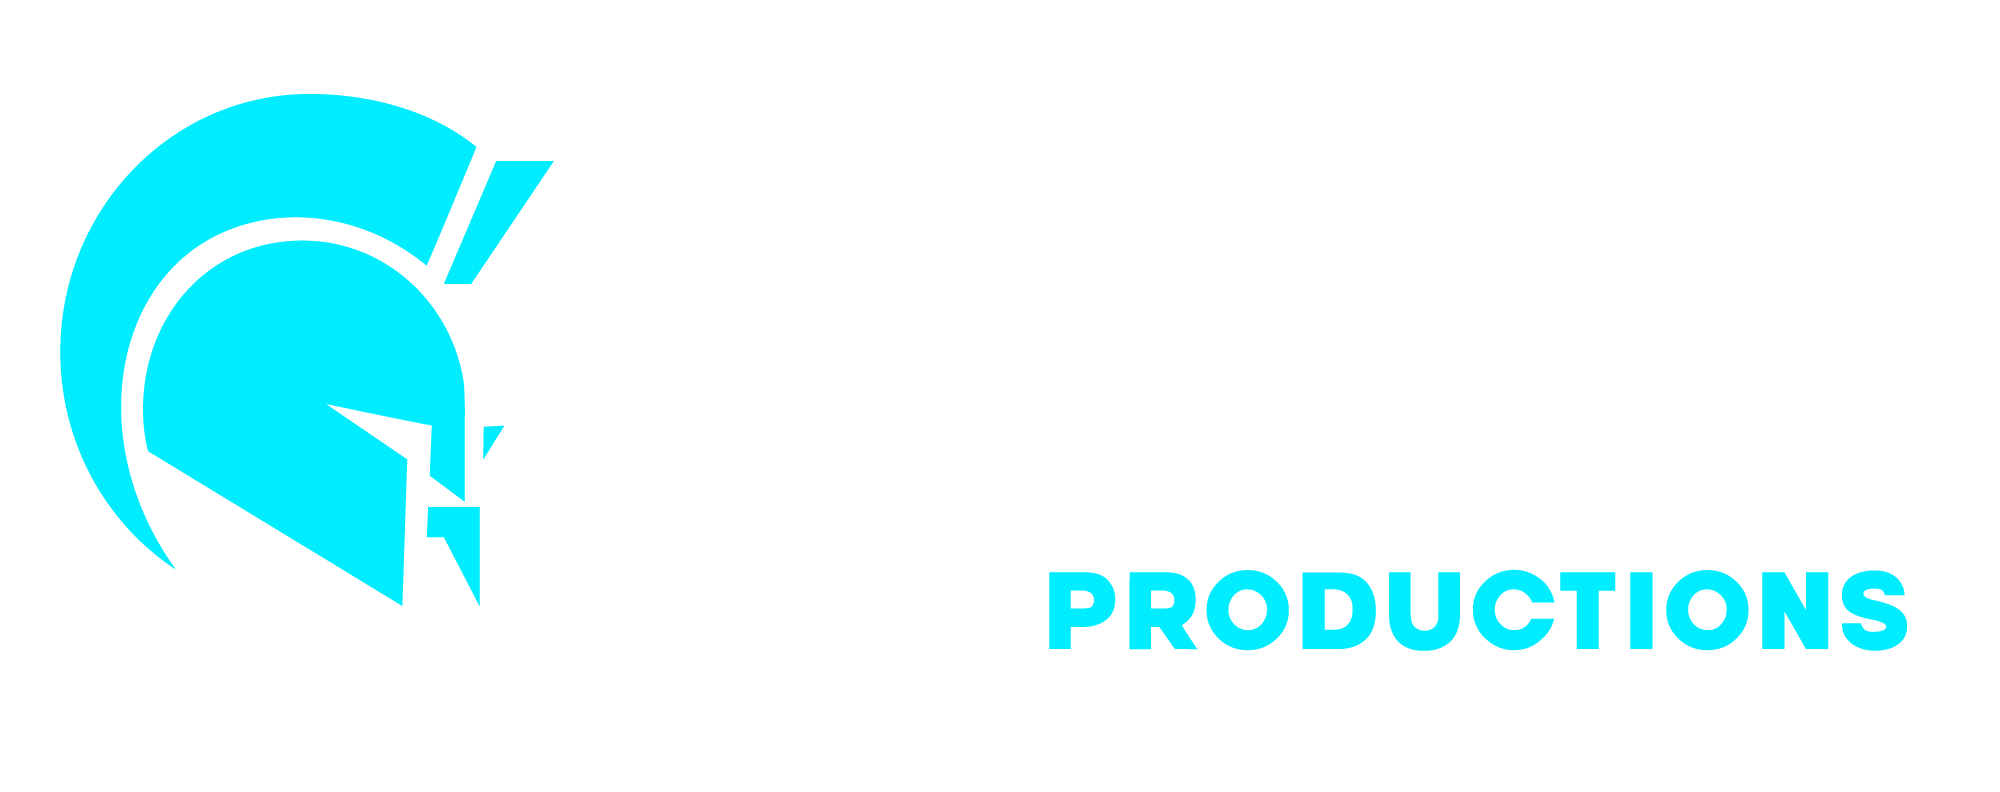 Gladiator Productions